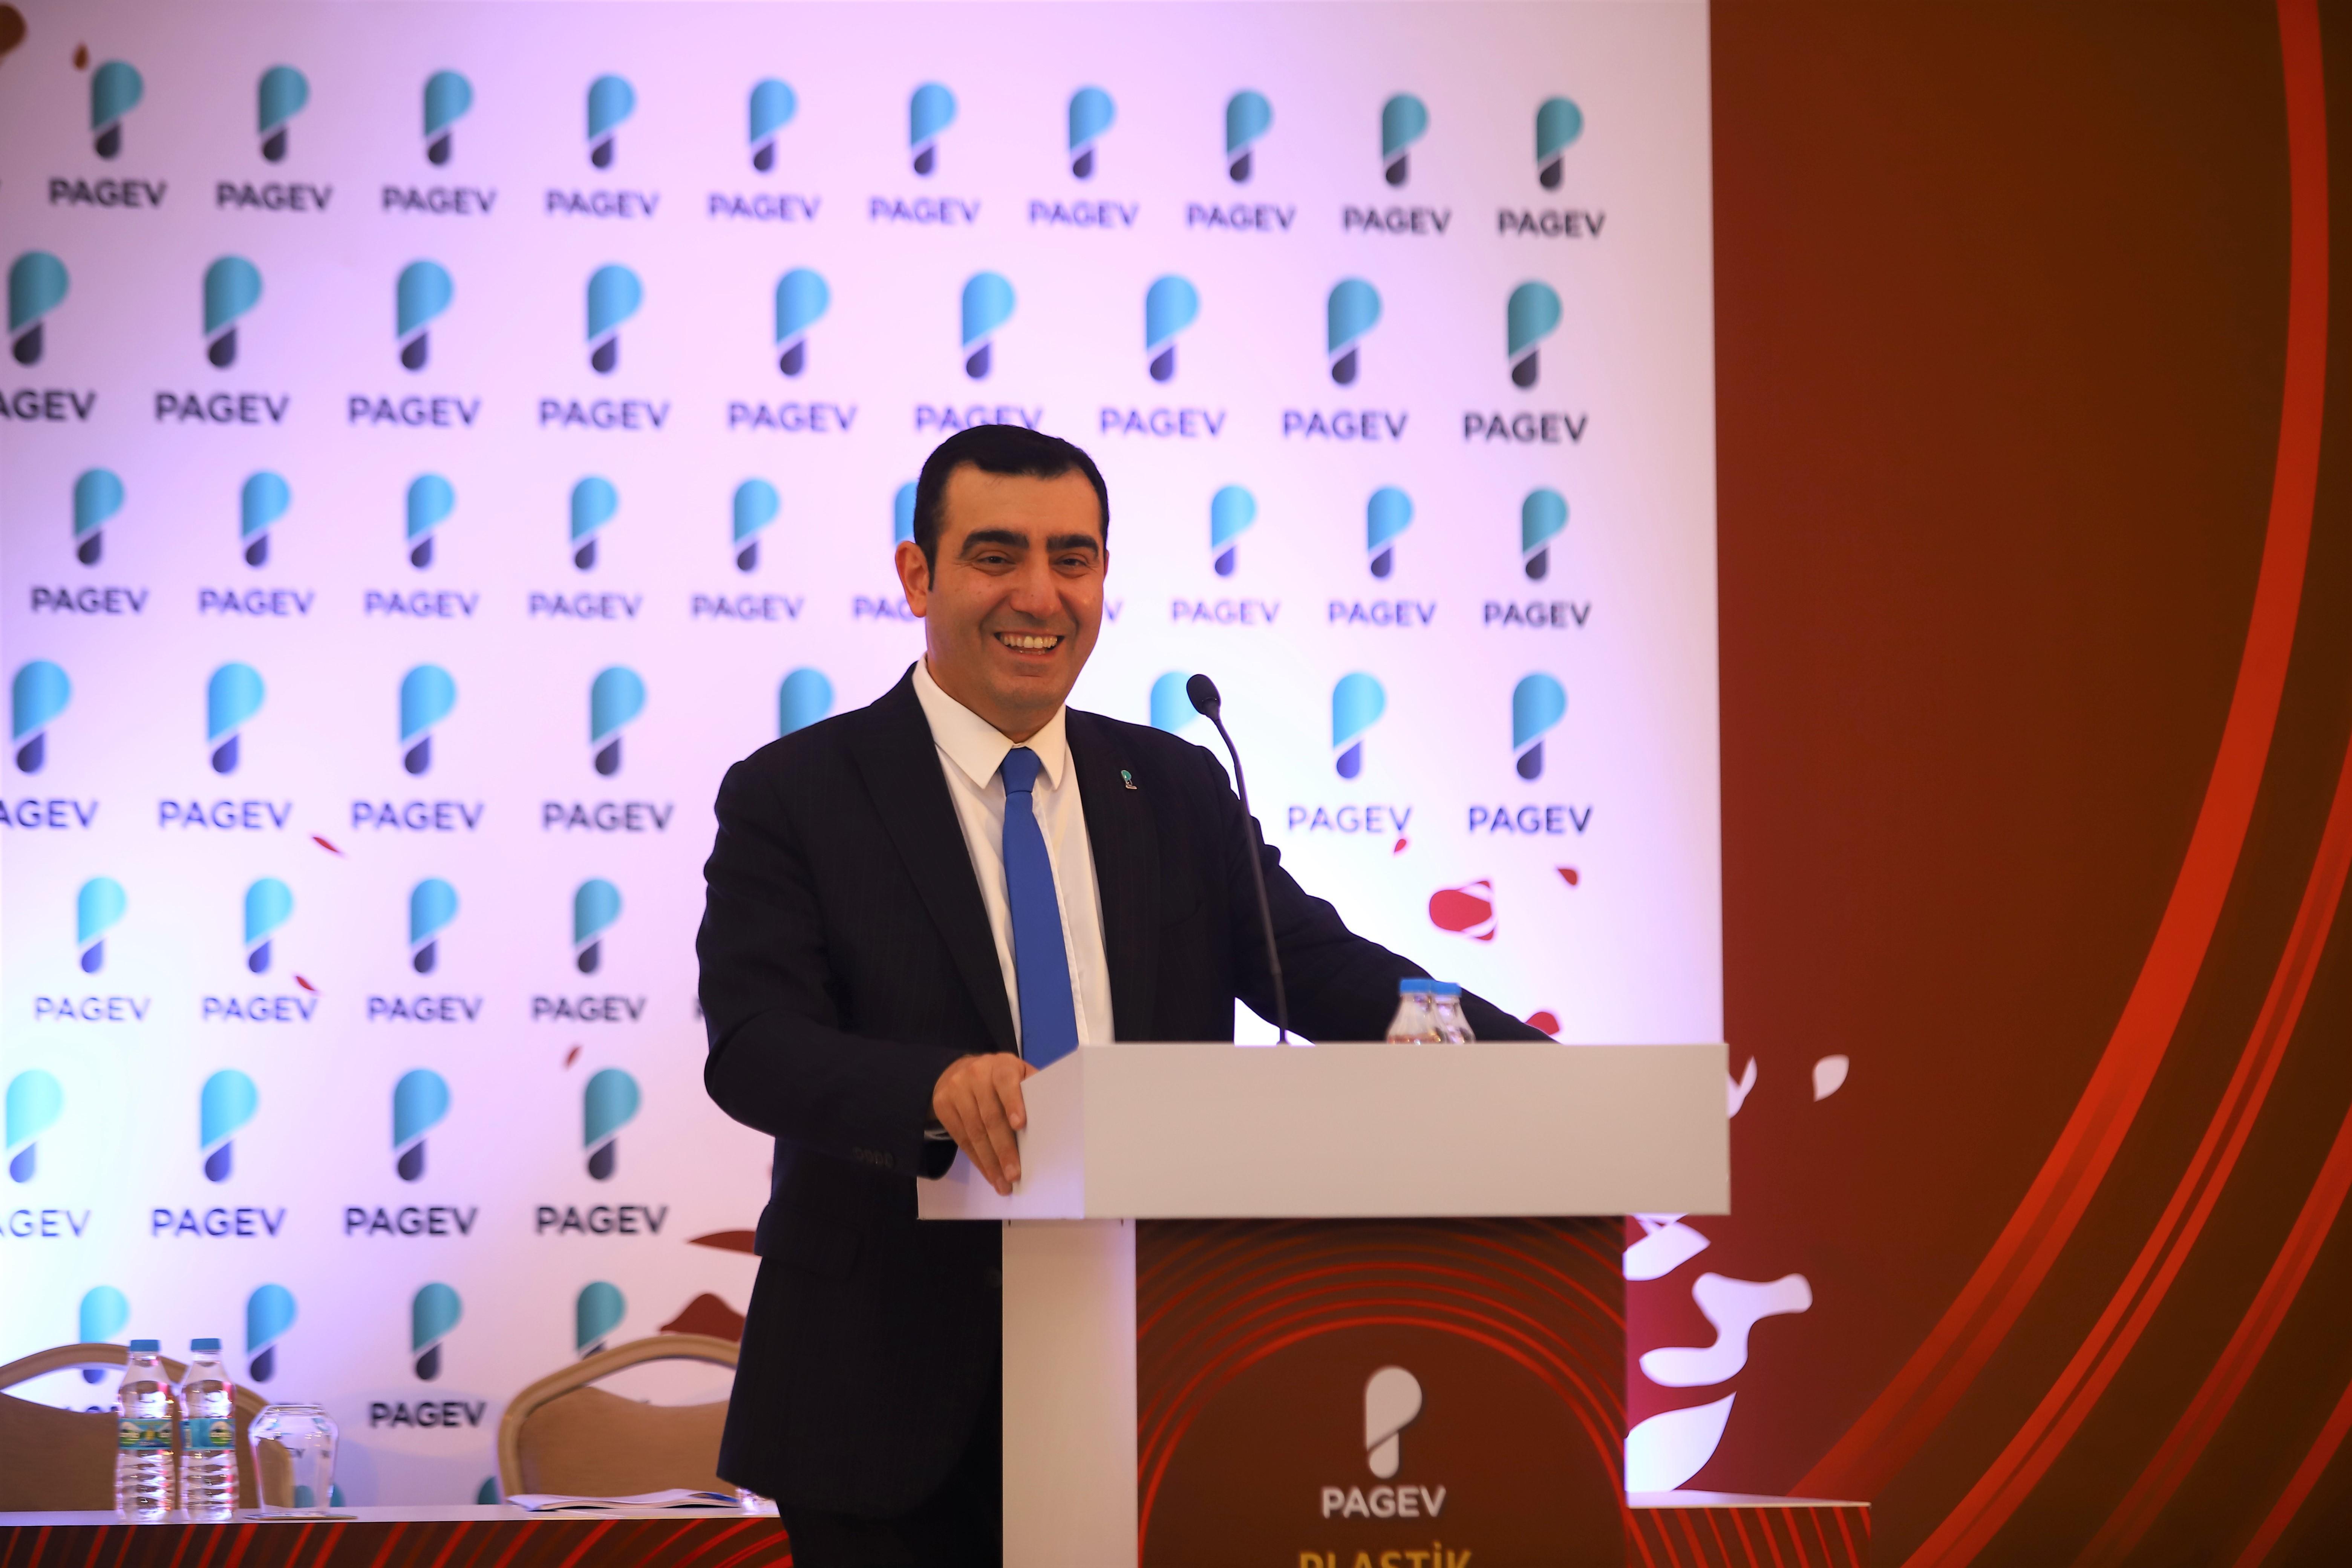 Yavuz Eroğlu Unanimously Re-elected as PAGEV President